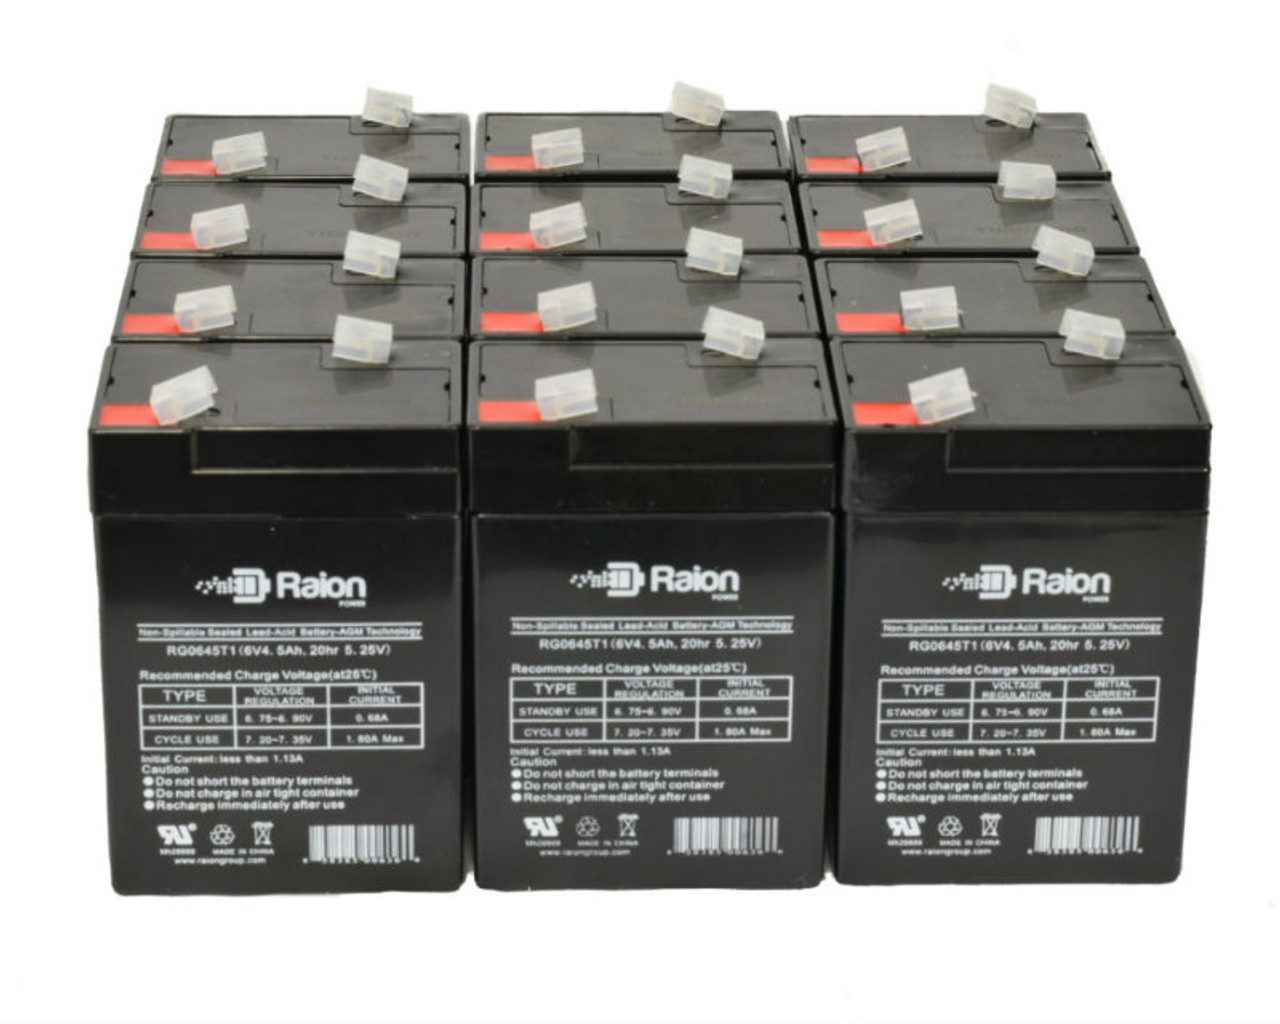 Raion Power 6V 4.5Ah Replacement Emergency Light Battery for Teledyne Big Beam S64 - 12 Pack